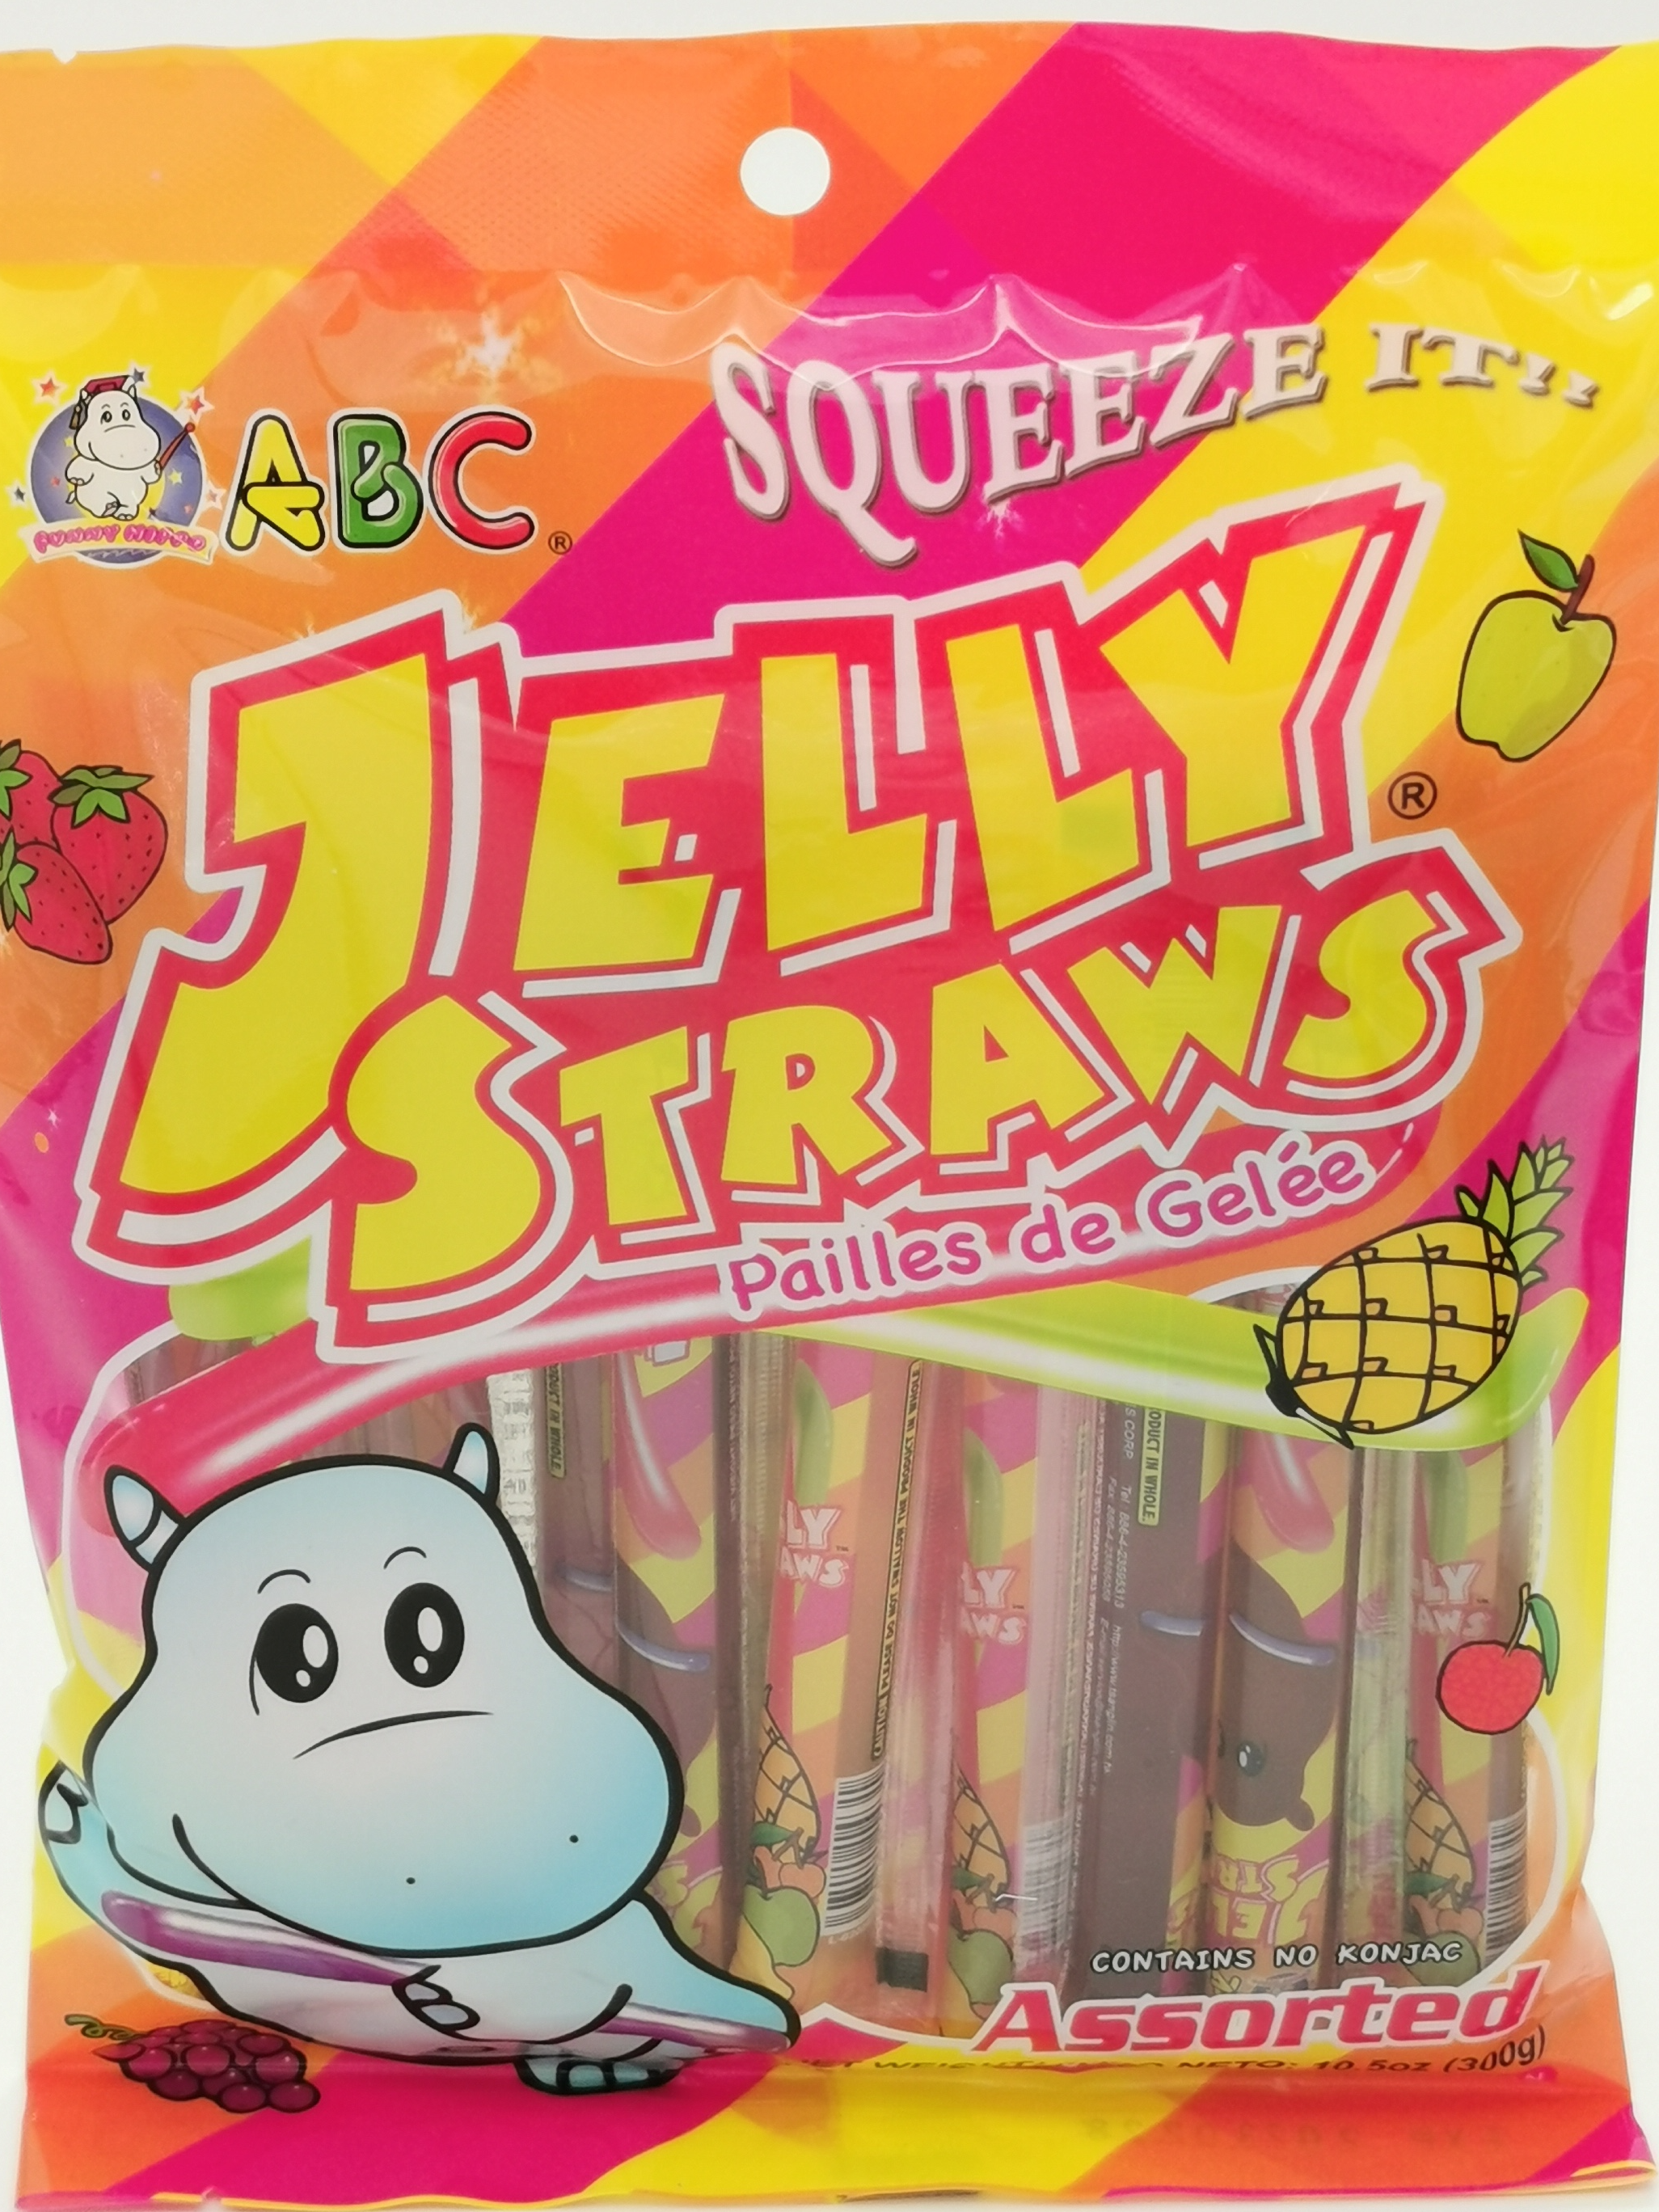 Jelly Straws Pailles de Gelee 300g